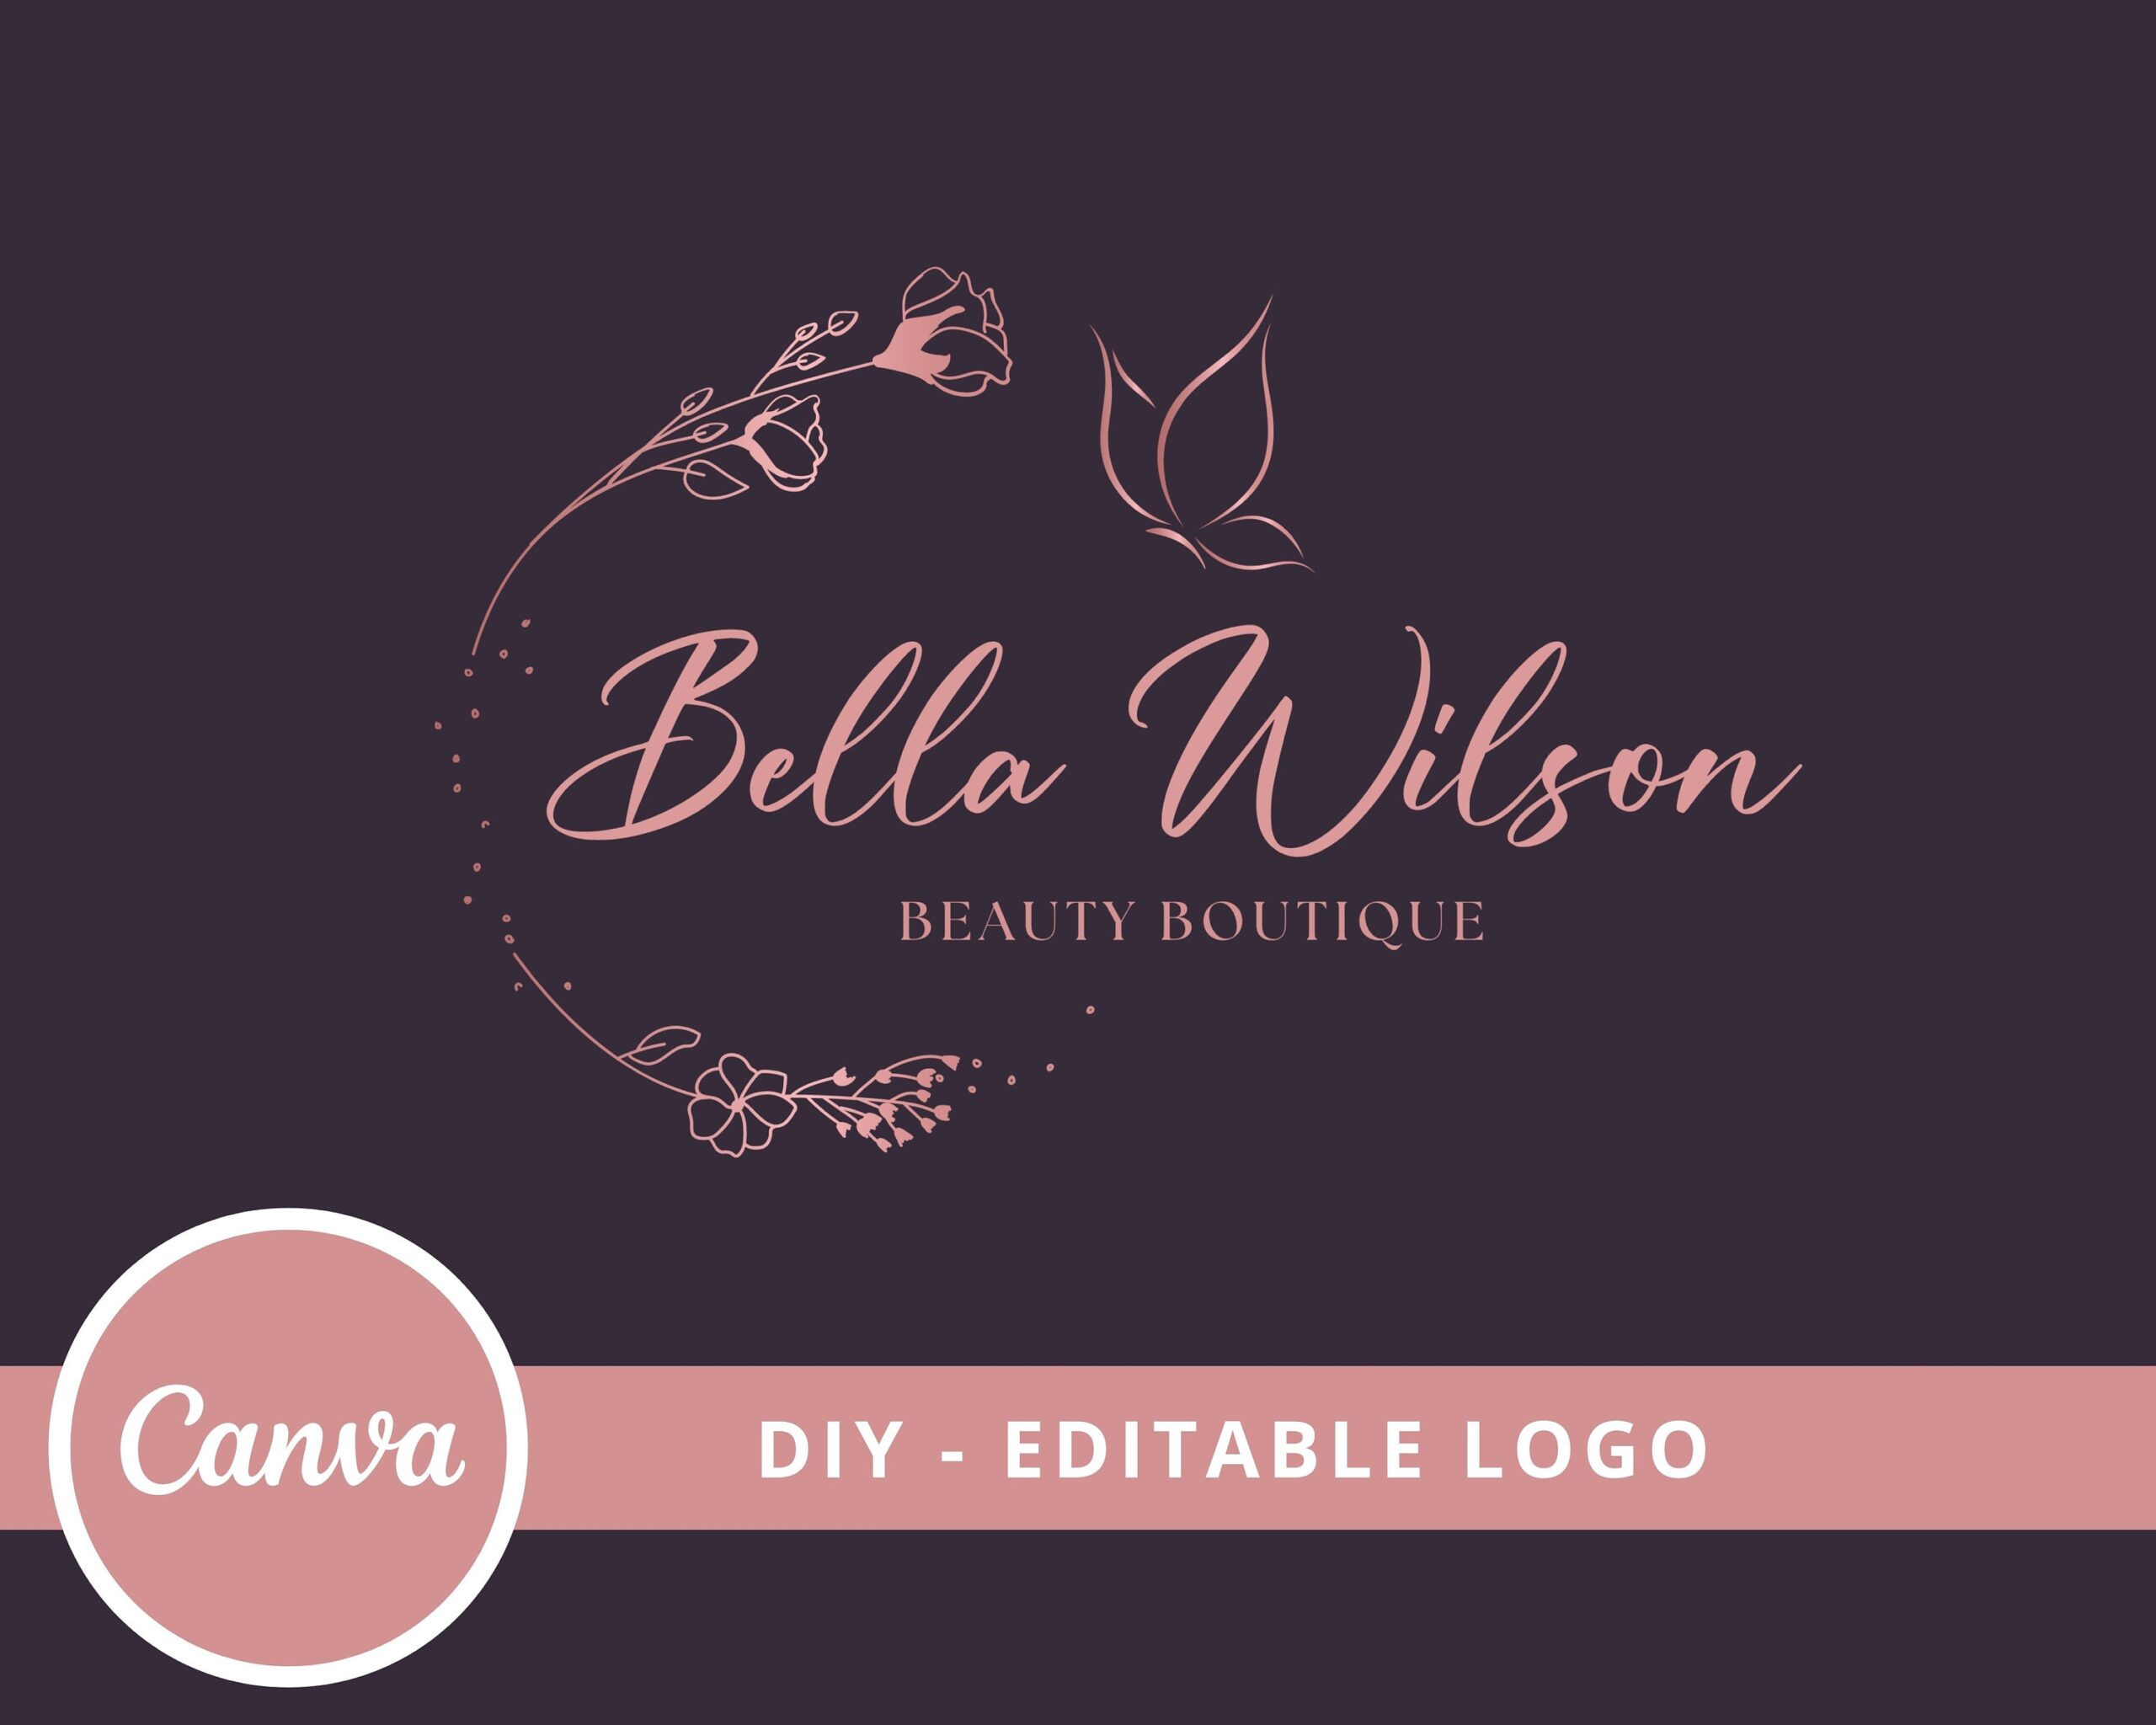 Editable Logo Design -  DIY Canva Logo Template -  Wellness Life Coach -  Spa -  Beauty Salon Logo - Instant Download - Love Lotus Original Design